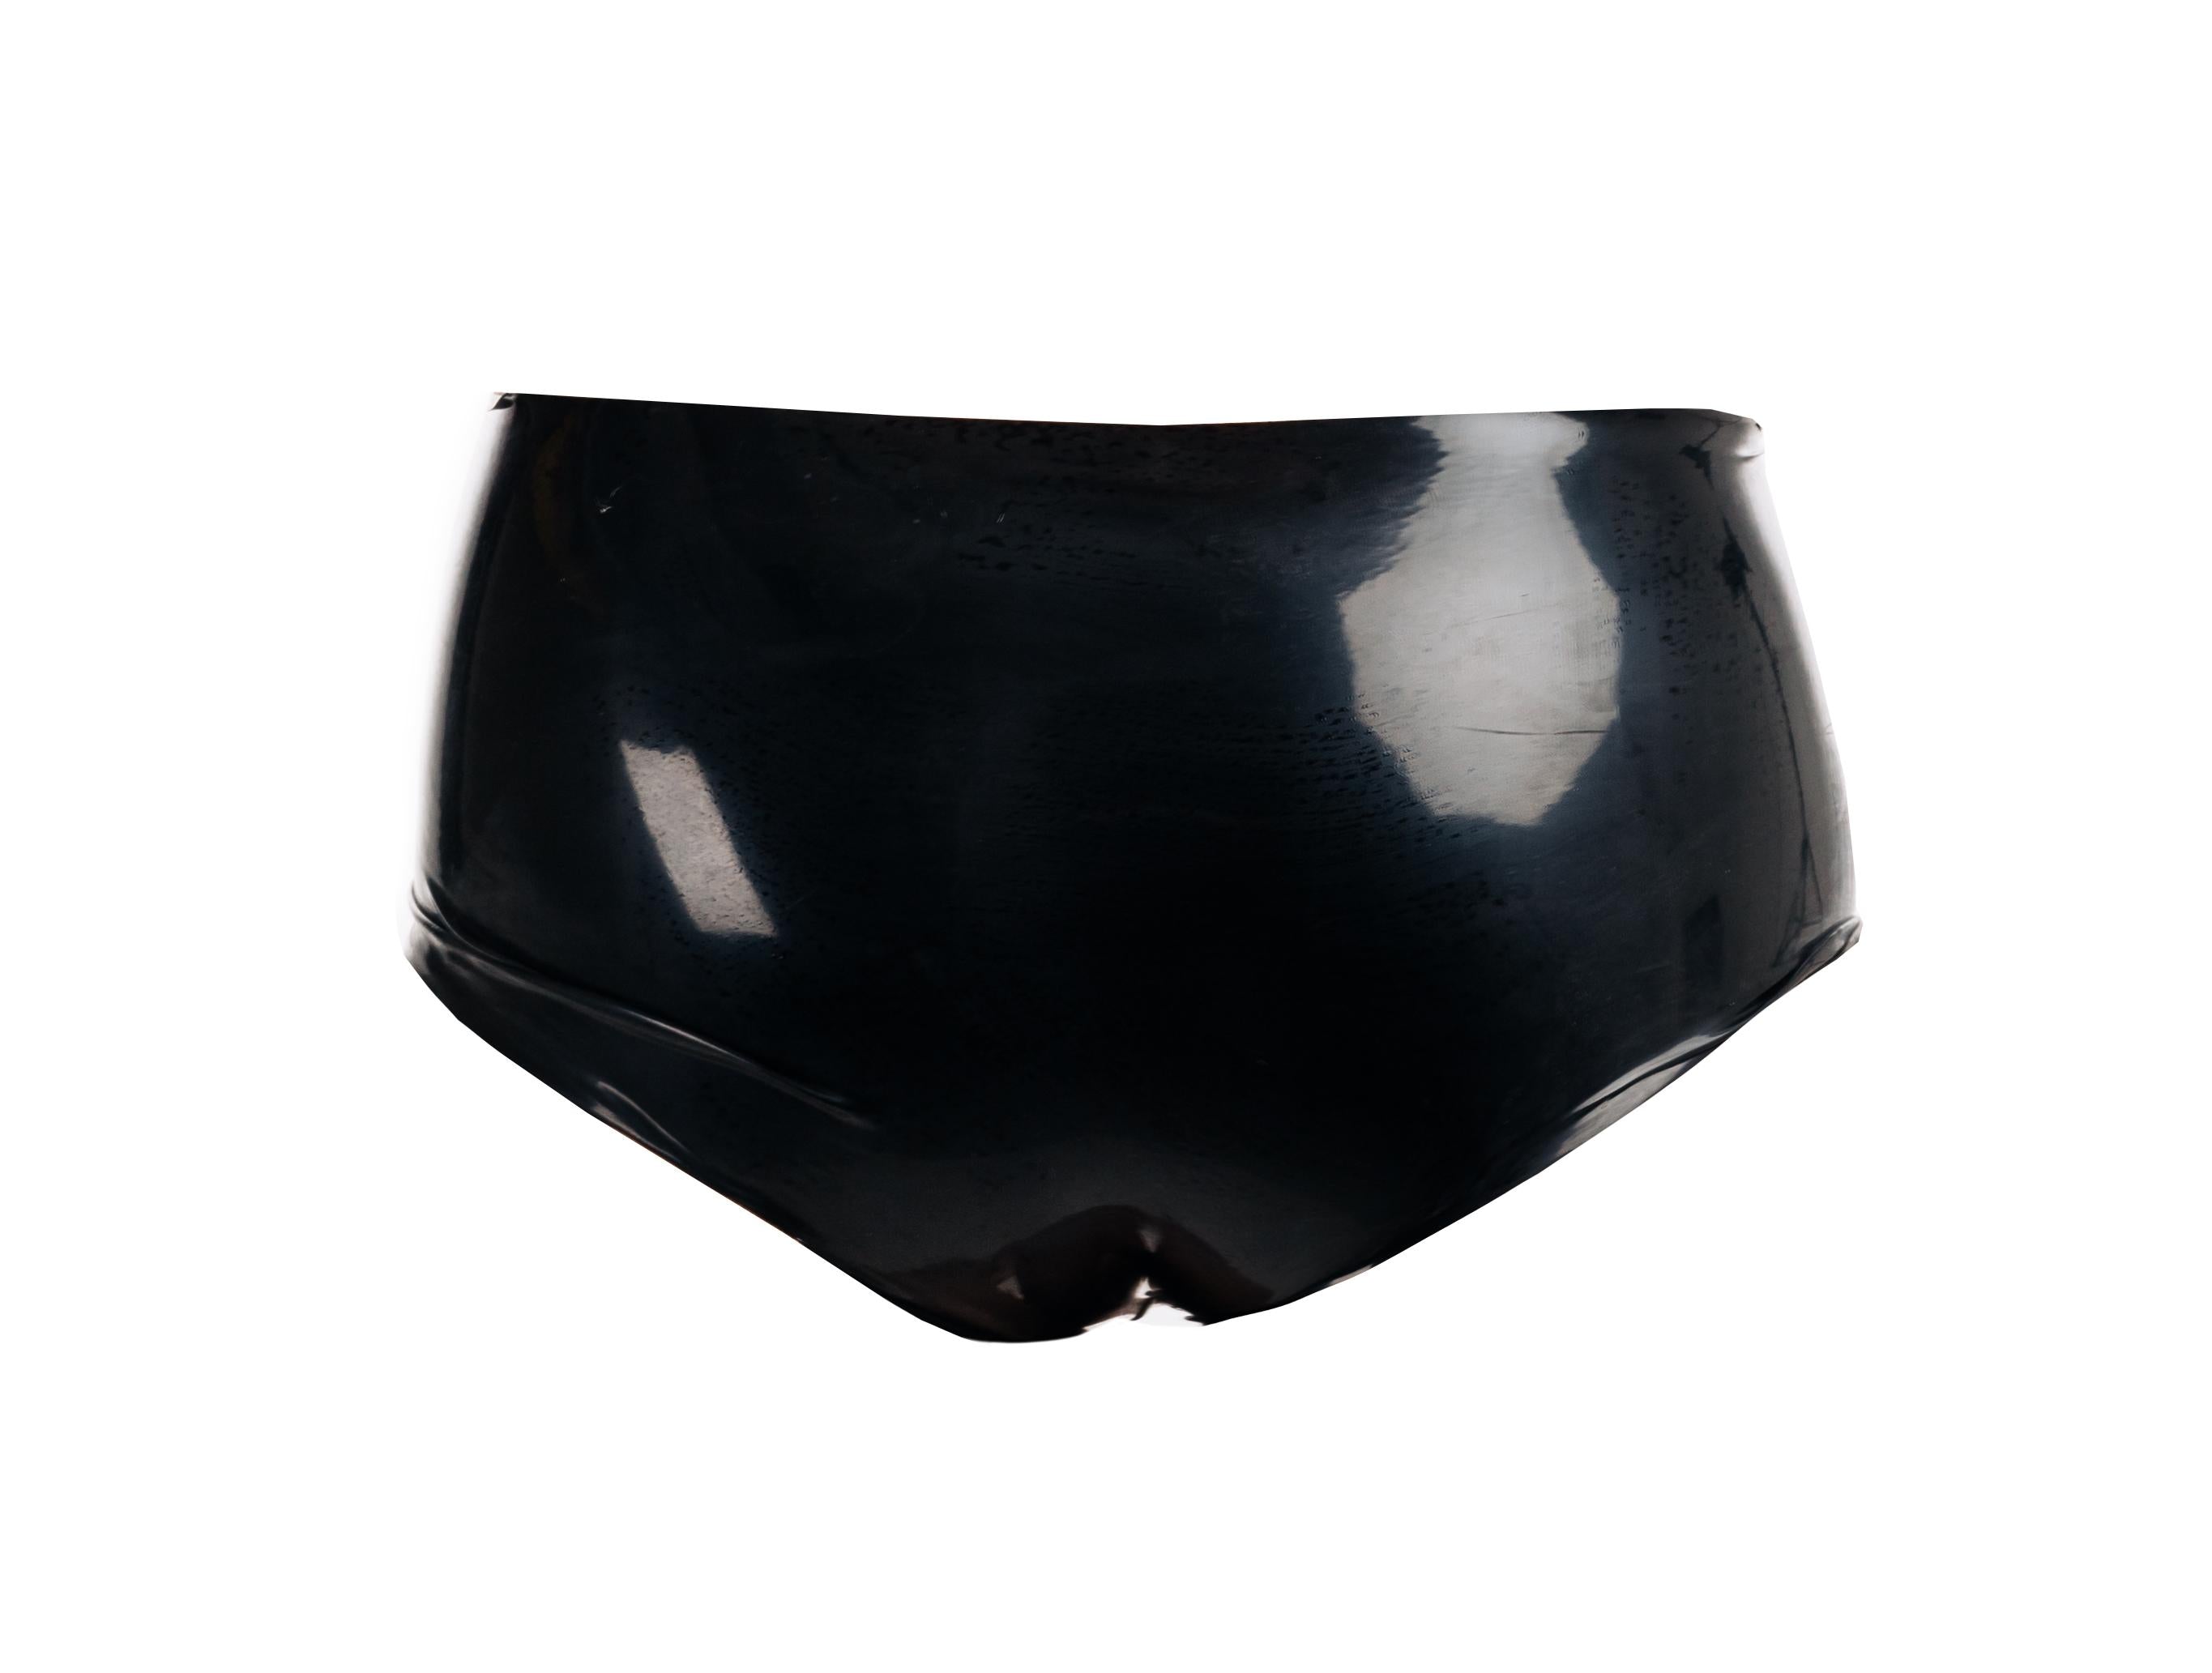 Rubberfashion Latex Hotpants - Rubber Gummi Hose Pants - sexy Shorts - Latex Slip Dessous für Damen und Herren